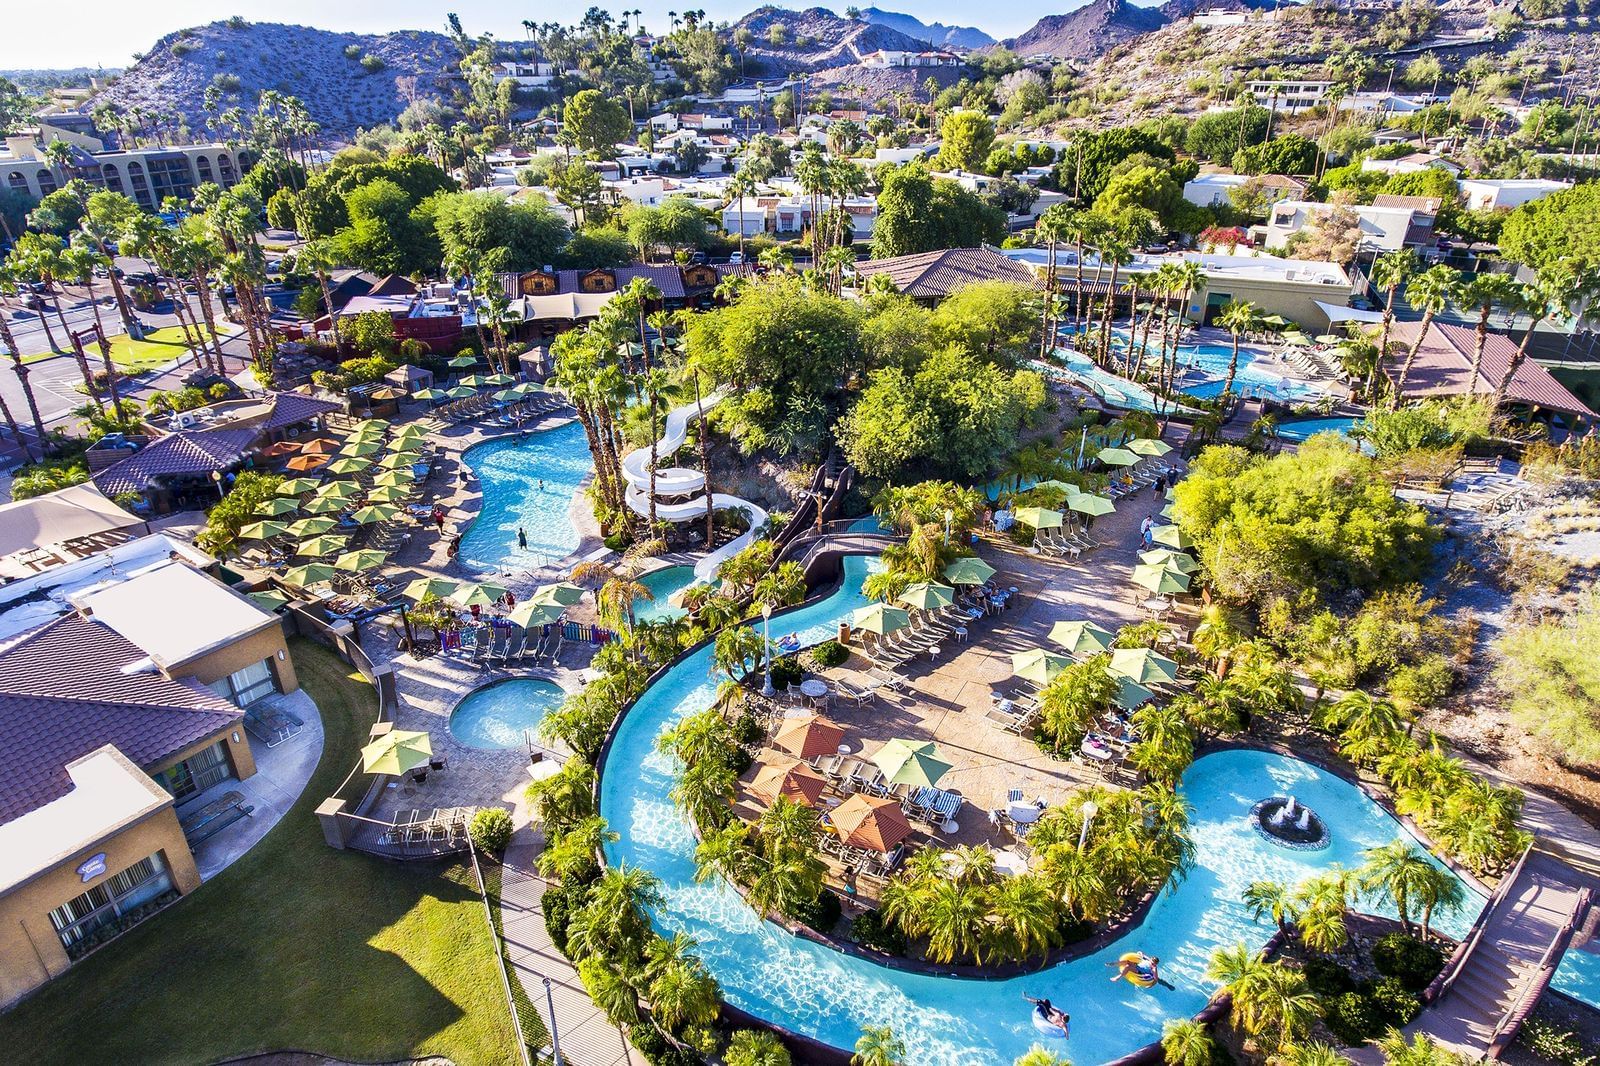 Best Waterpark Resorts in Arizona - Off the AZ 303